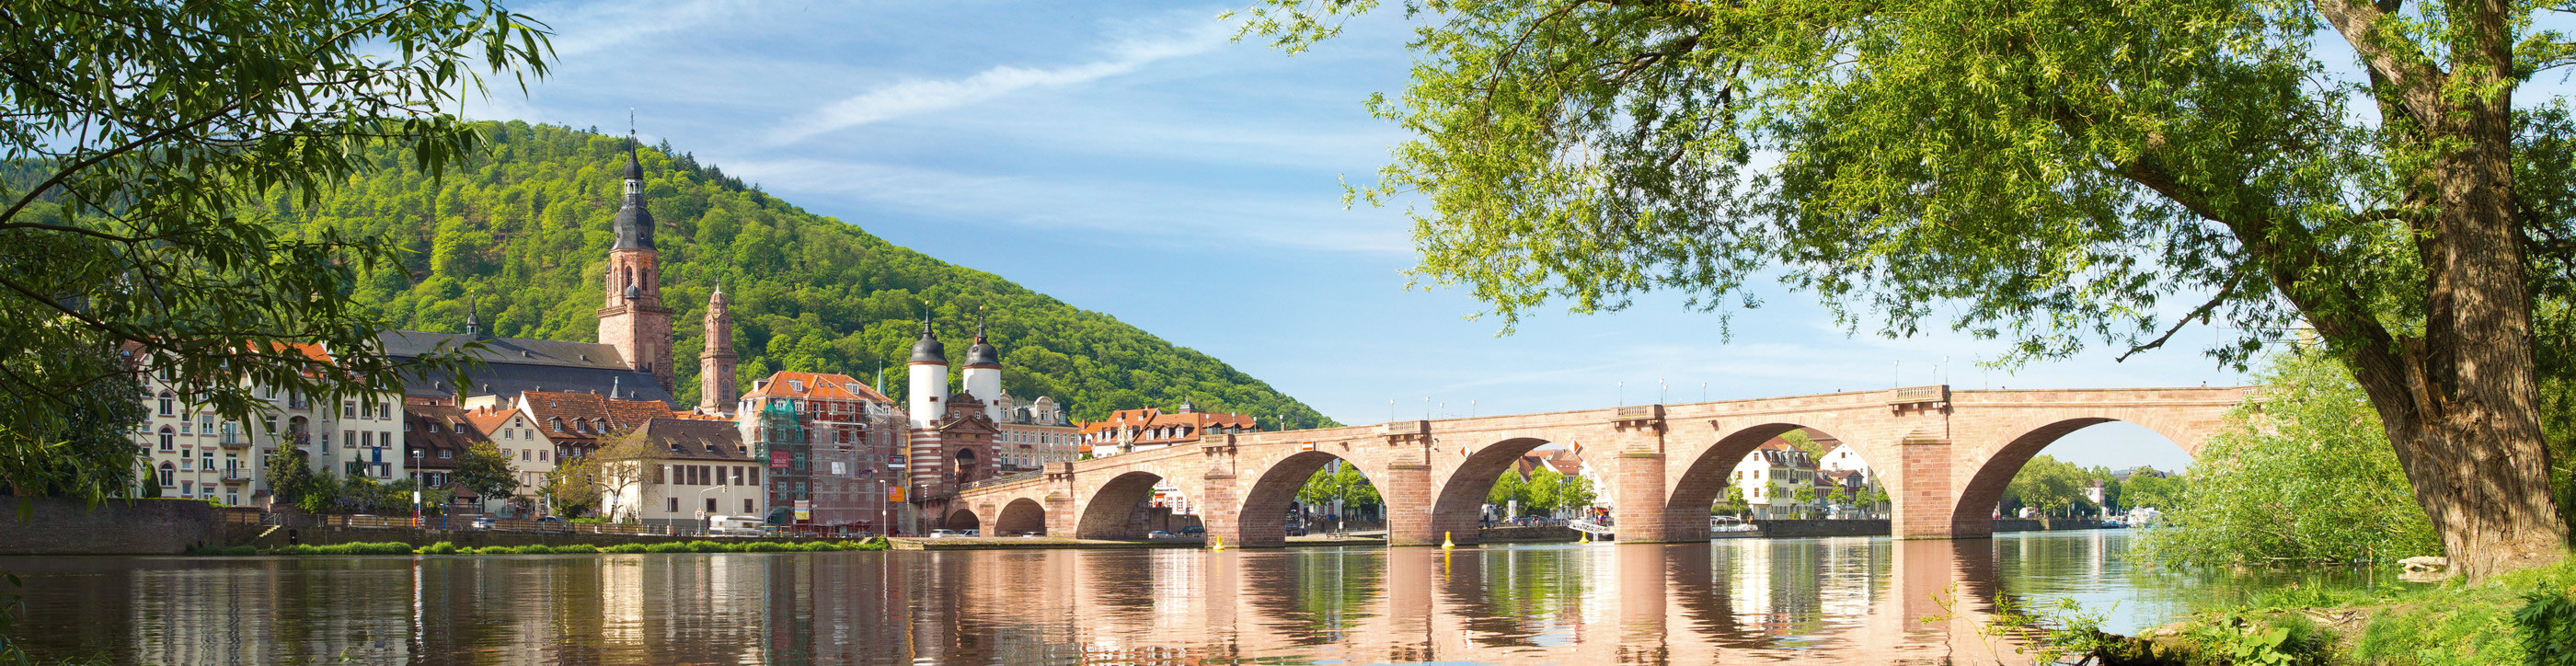 Bridge Heidelberg Germany